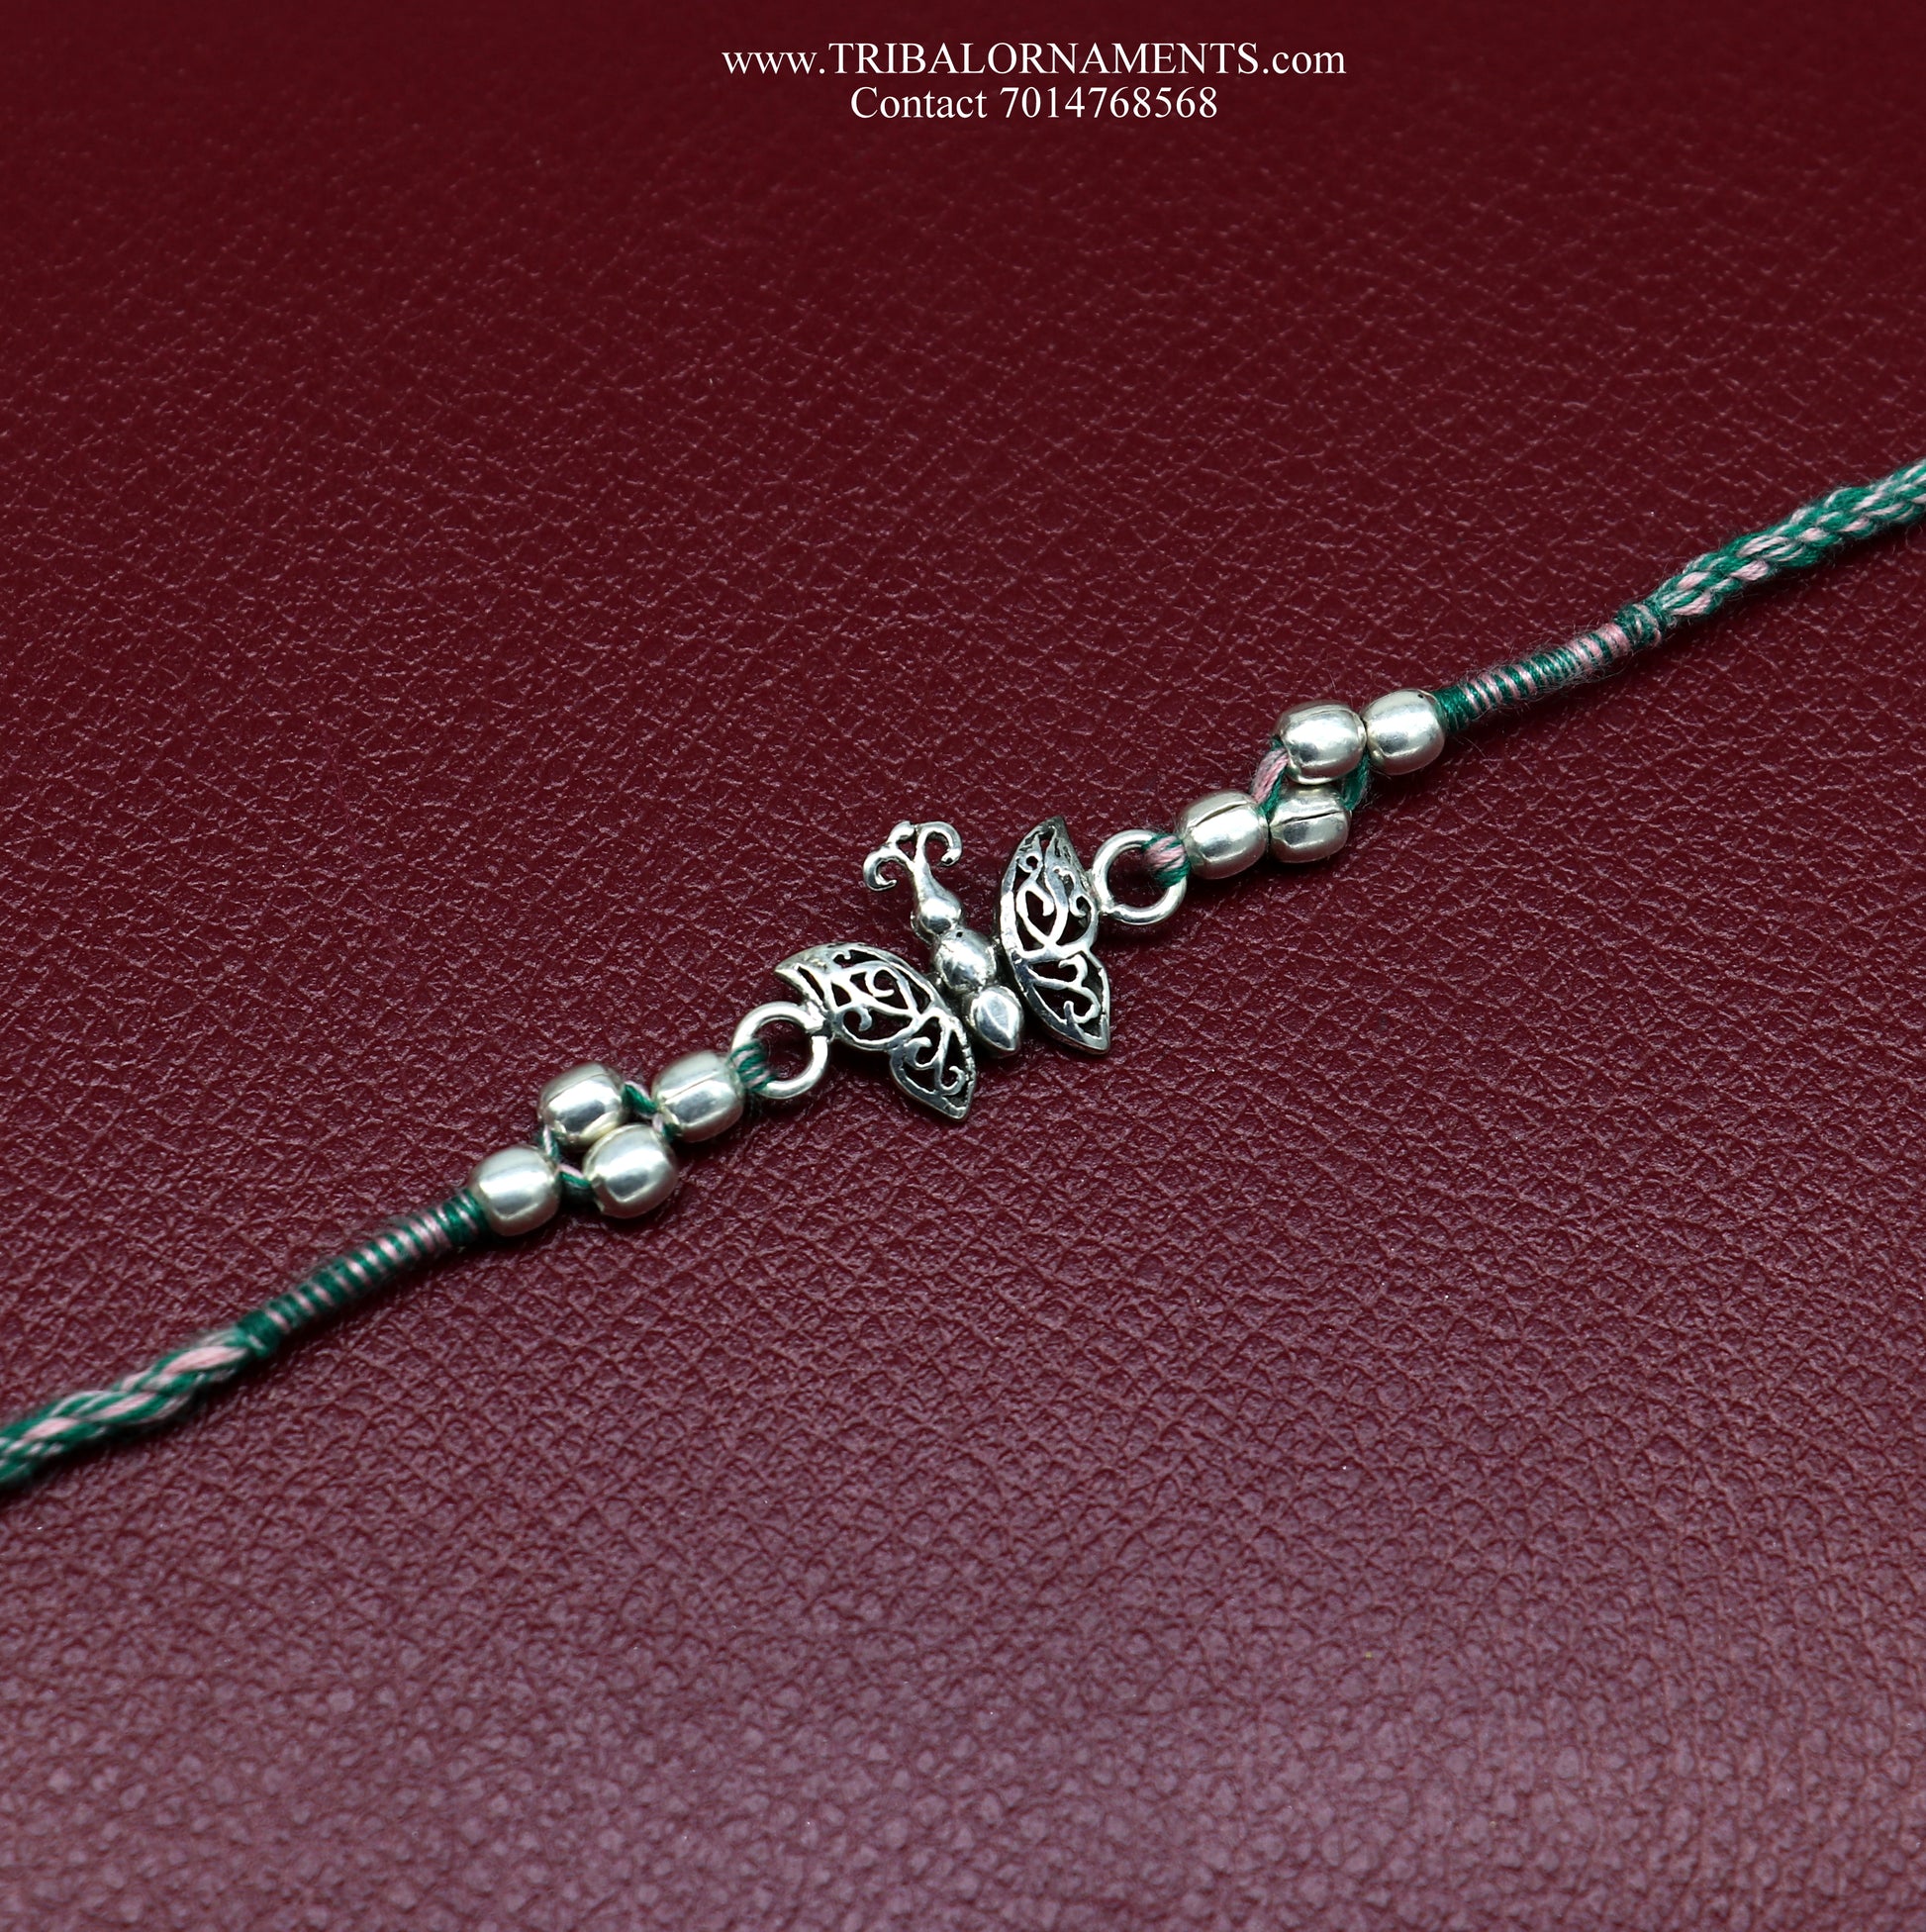 925 sterling silver handmade beautiful Butterfly design Rakhi Bracelet, amazing stylish gift for Rakshabandhan rk97 - TRIBAL ORNAMENTS